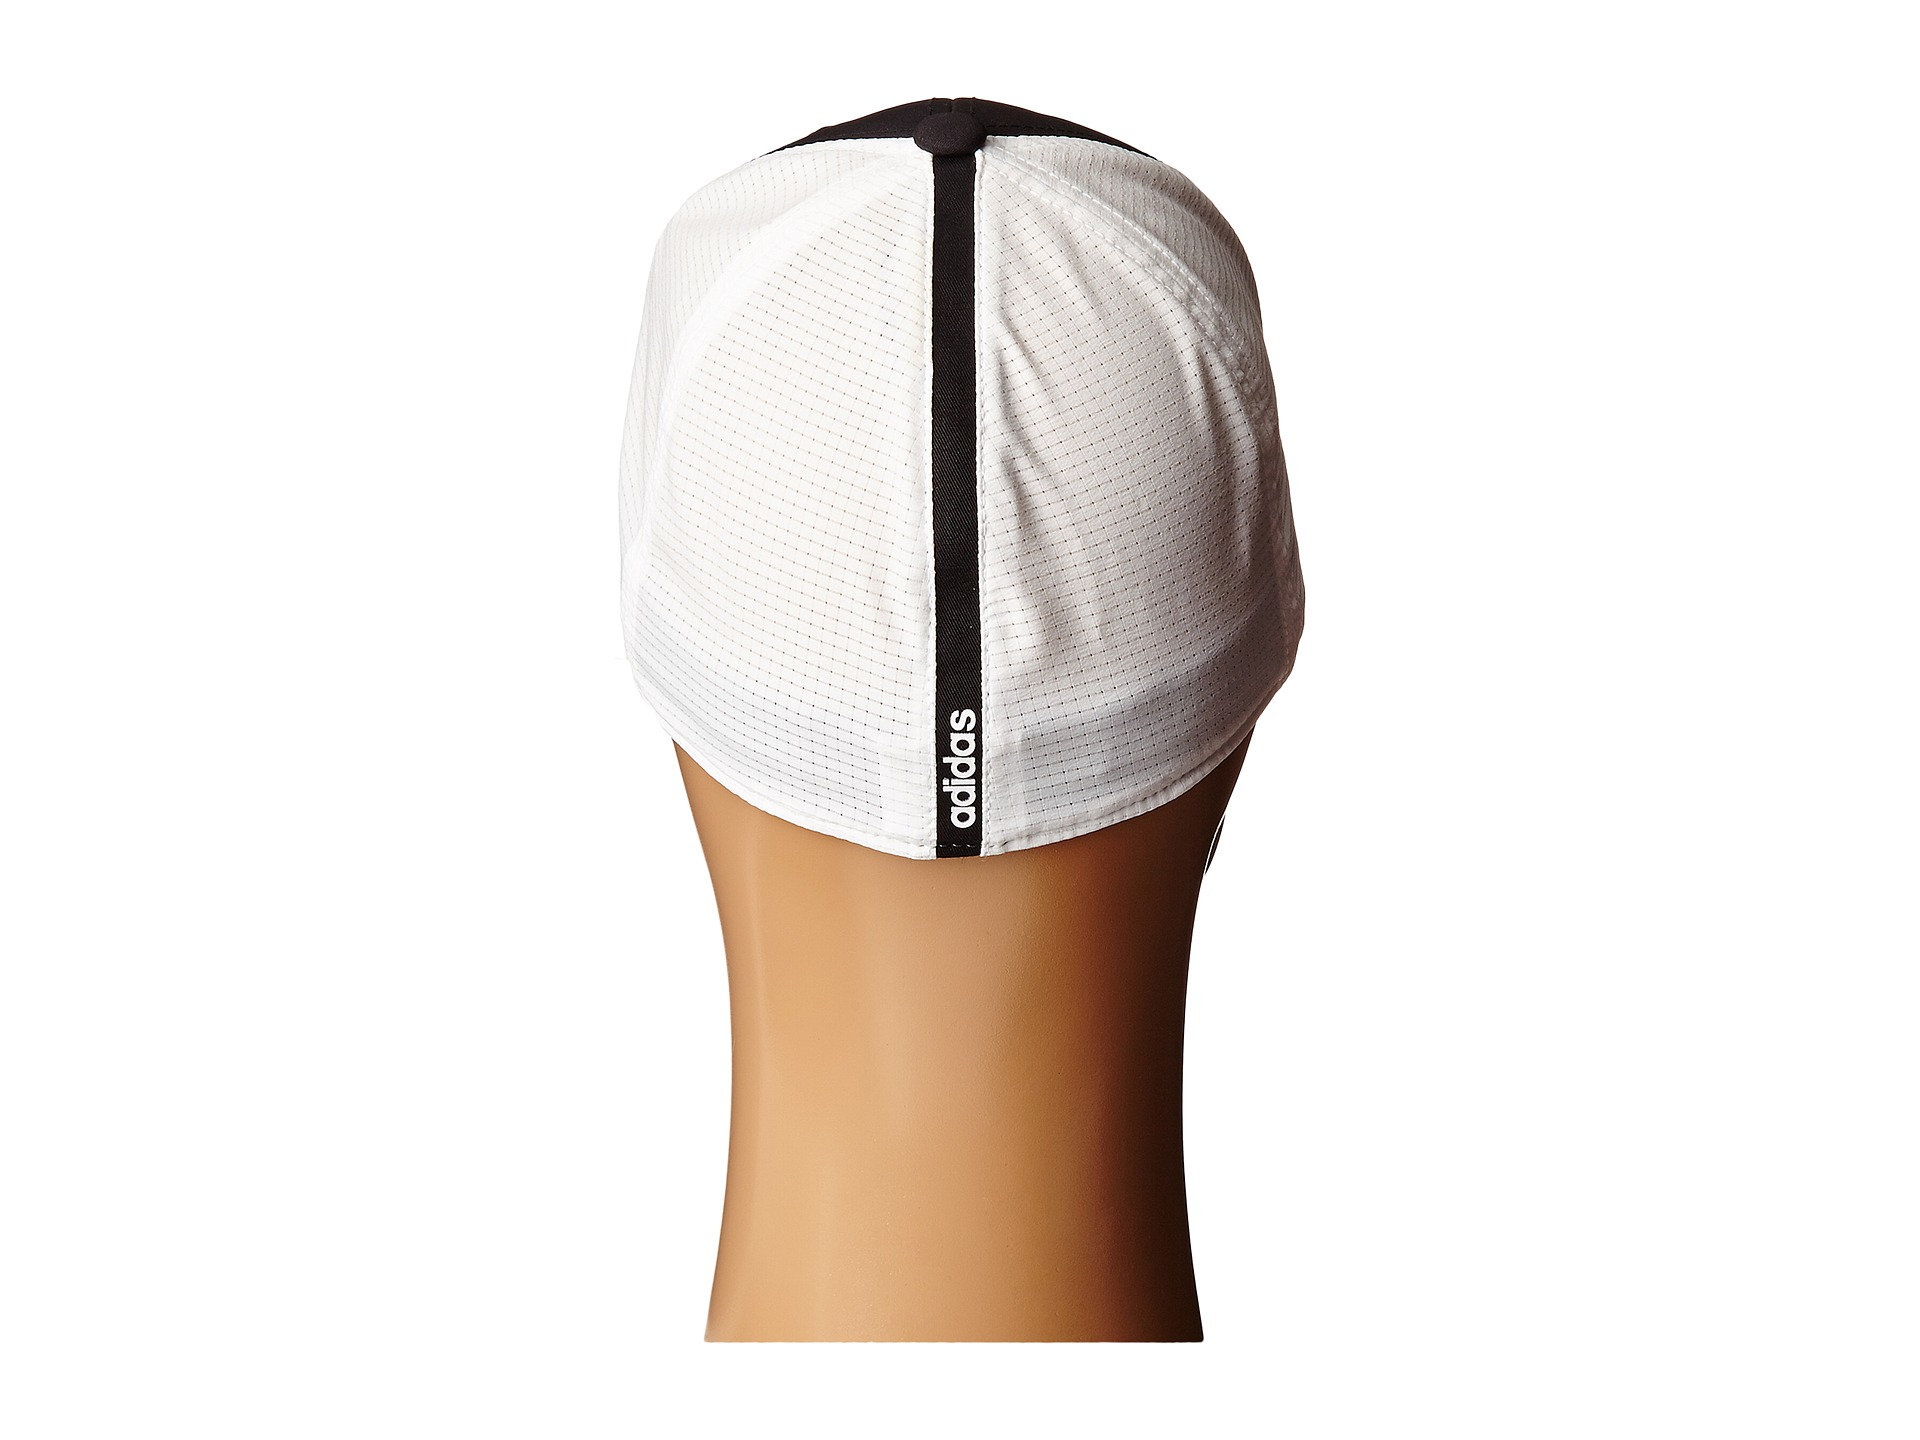 adidas Originals Lightweight Climacool® Flexfit Hat in Black/White (Black) for Men - Lyst